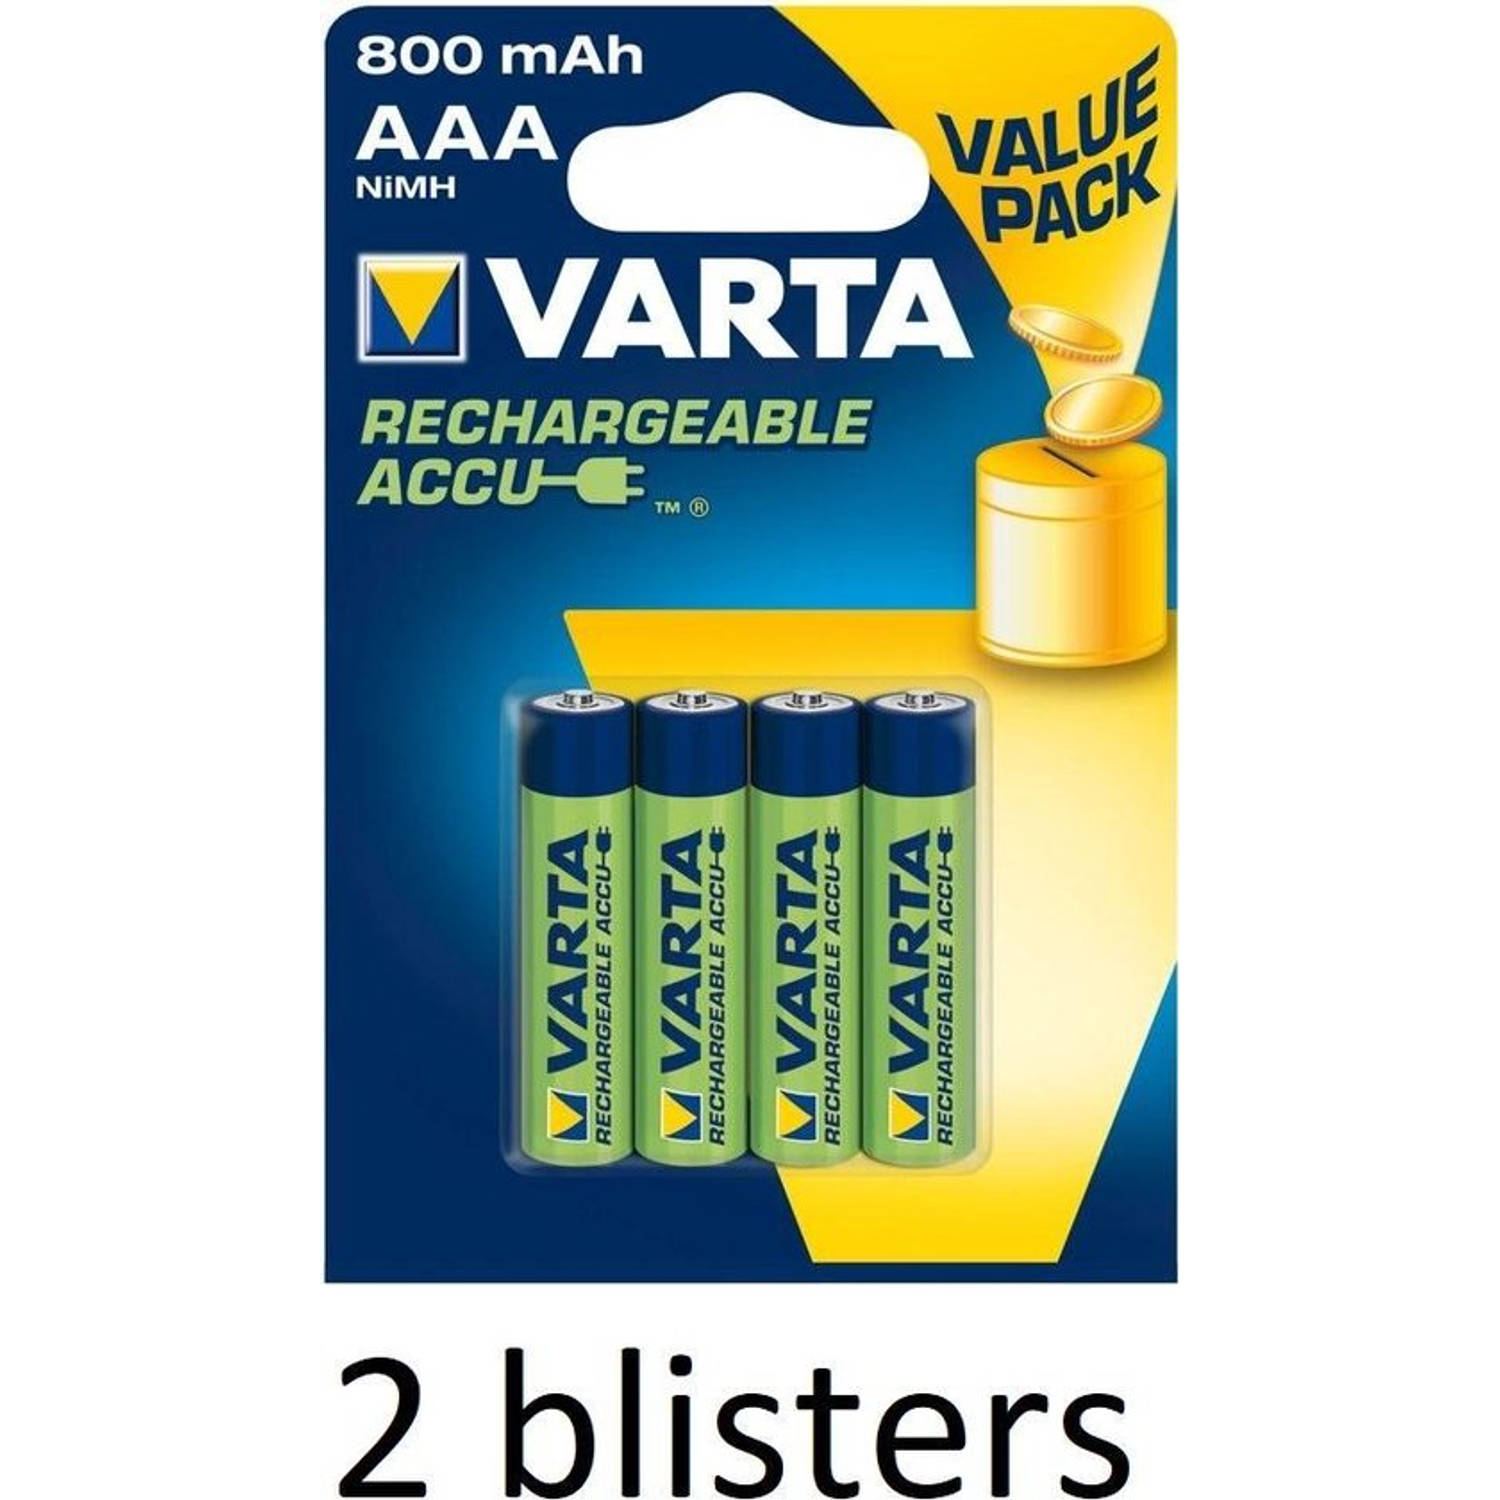 8 stuks (2 blisters a 4 stuks) Varta Rechargeable Accu AAA 800 mAh